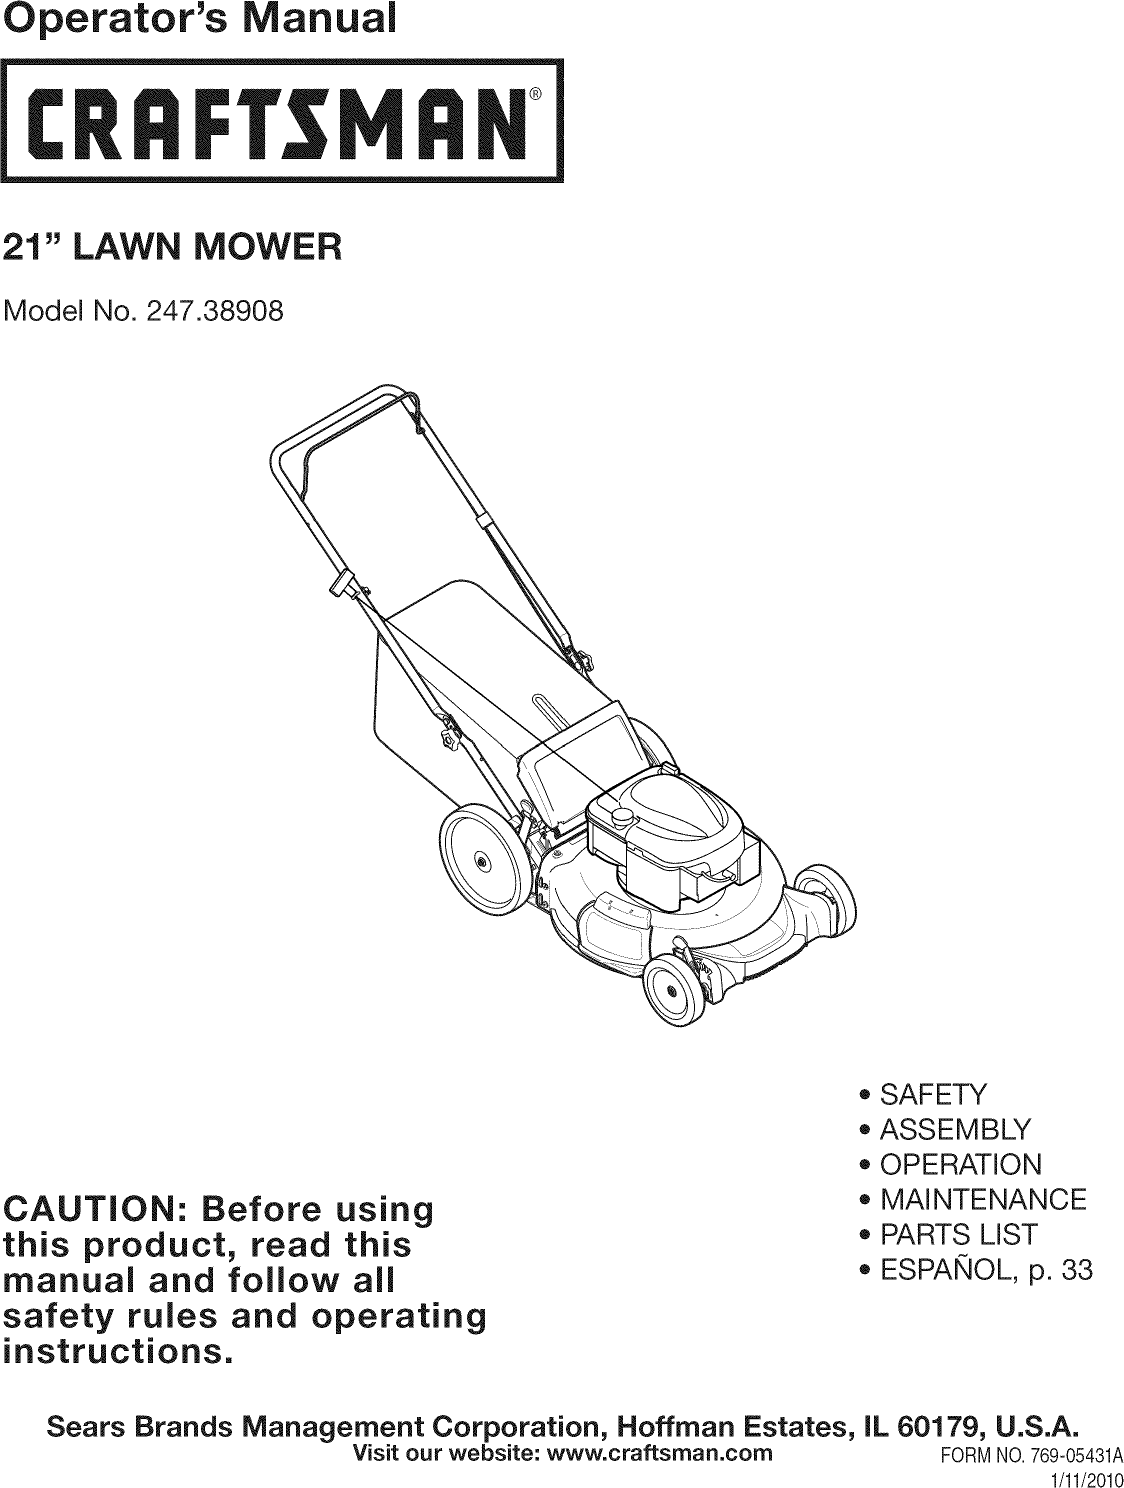 craftsman lawn mower manual canada